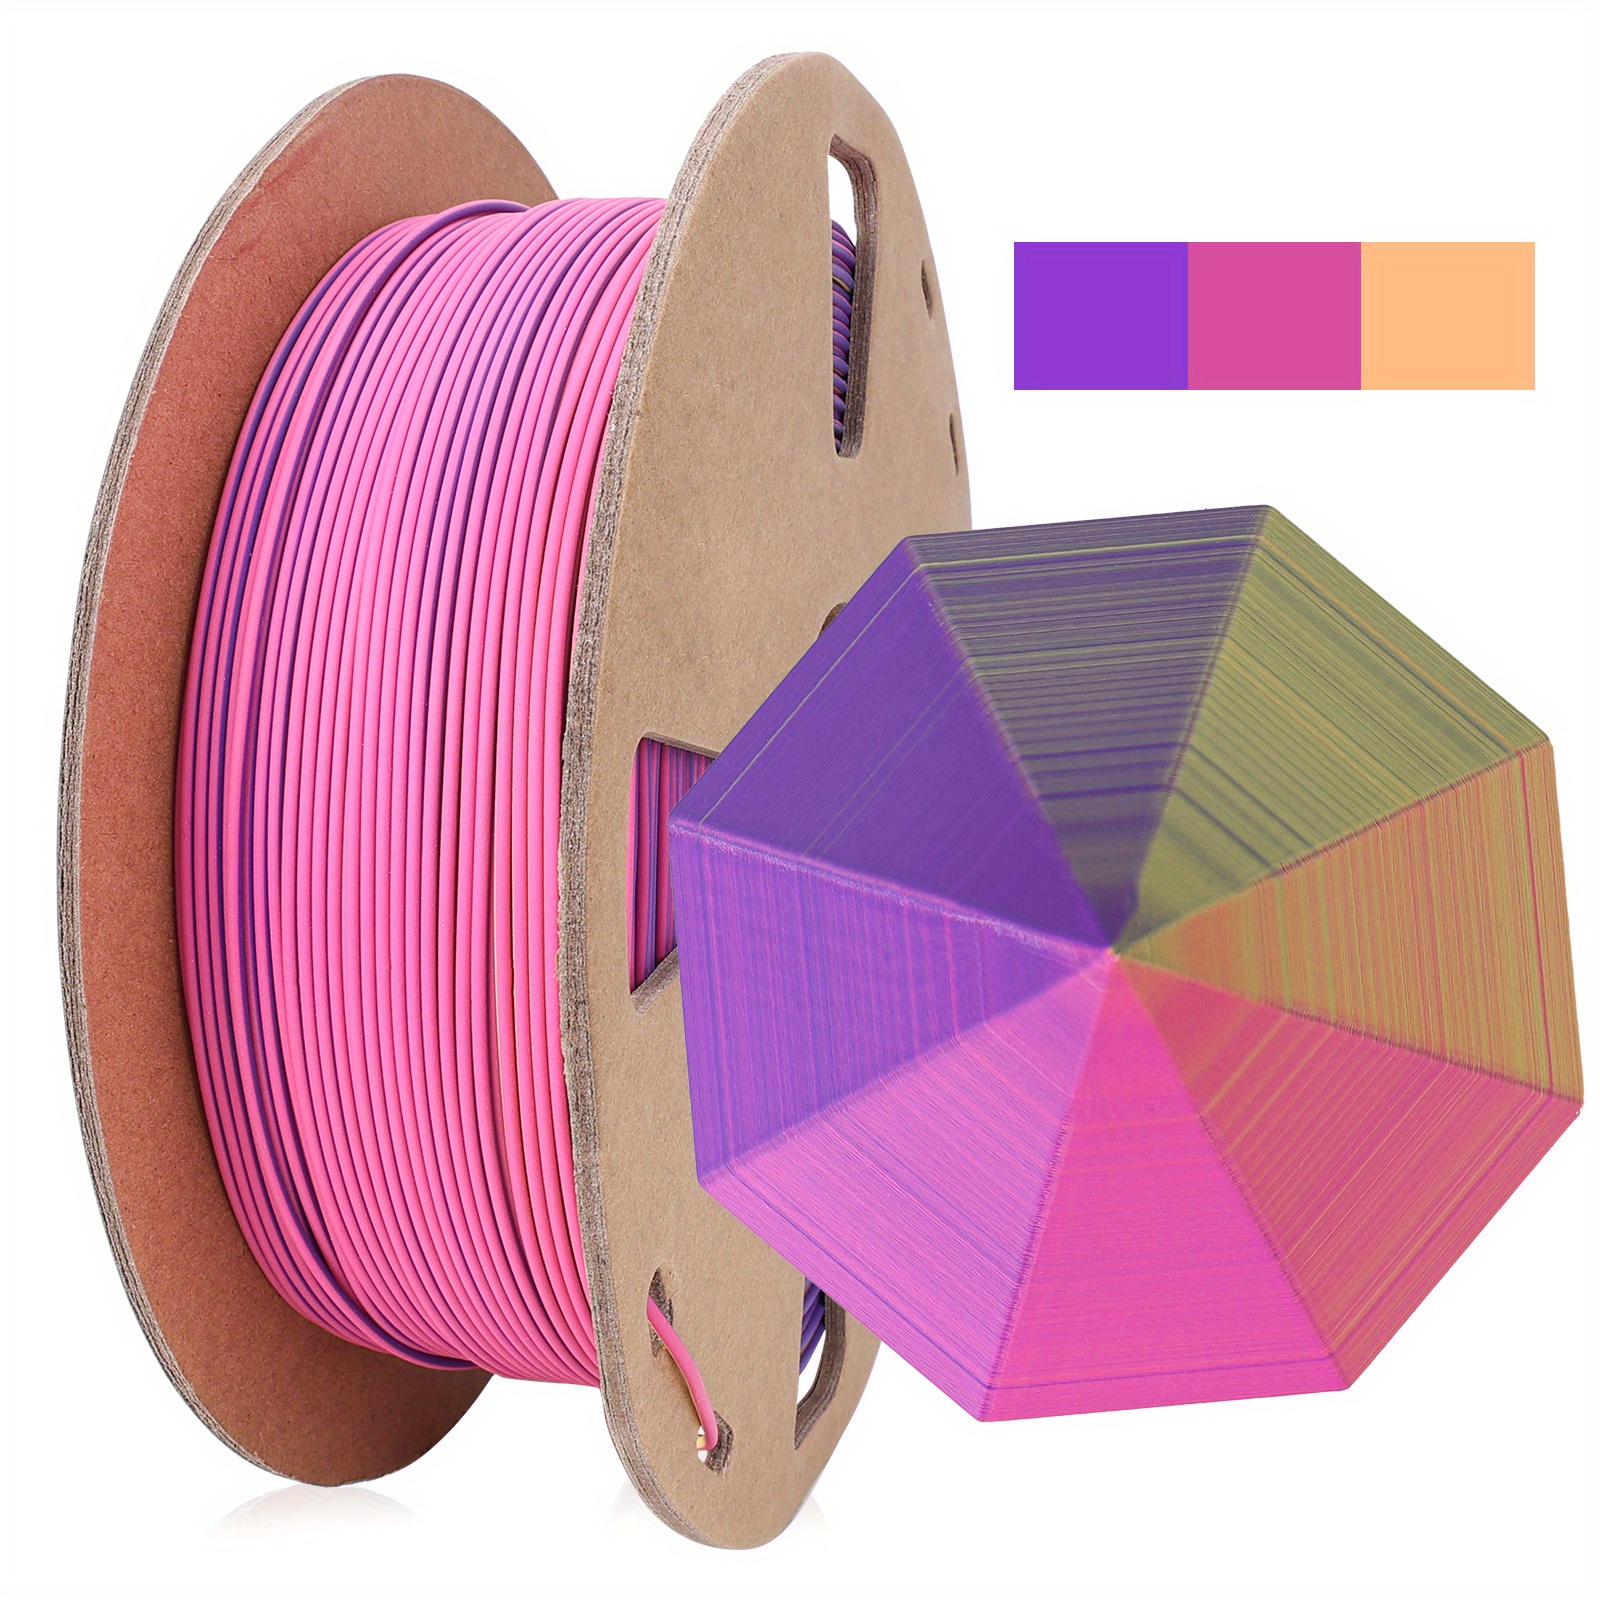 Reprapper Triple Color Filament Coextrusion PLA Filament 1.75mm for 3D  Printer & 3D Pen, Multicolor Like Dual Color Rainbow PLA, 2.2lbs (1kg)